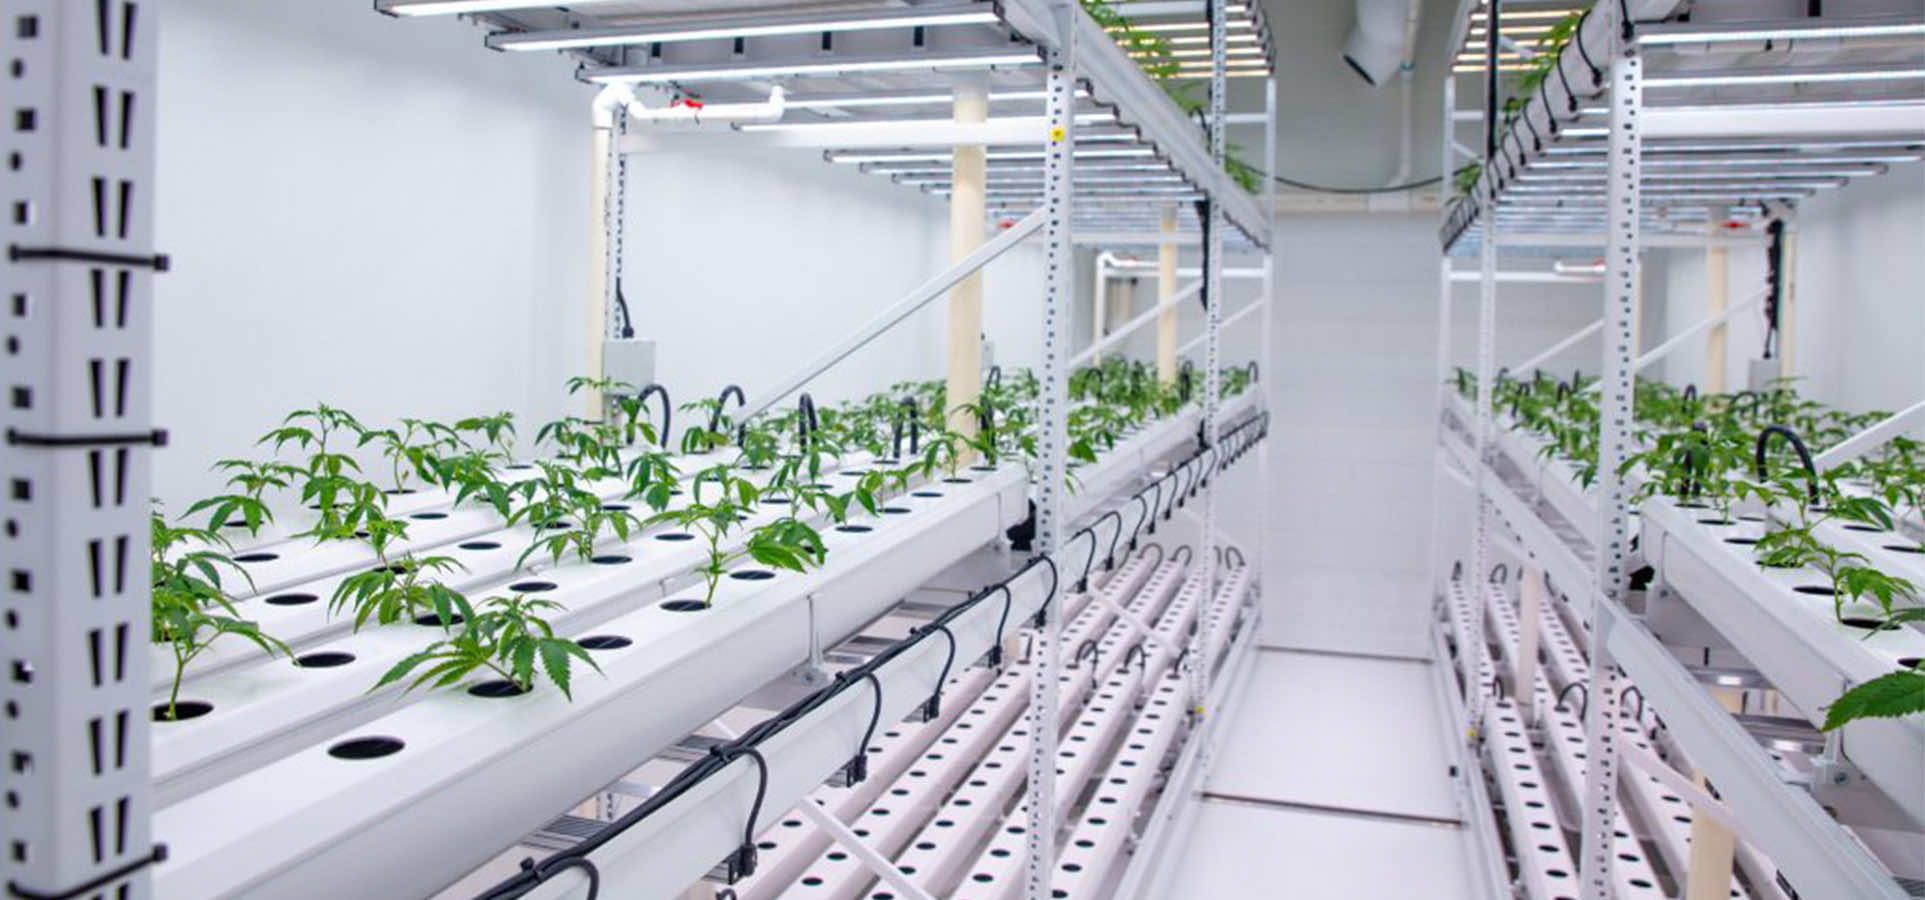 medical cannabis vertical grow system